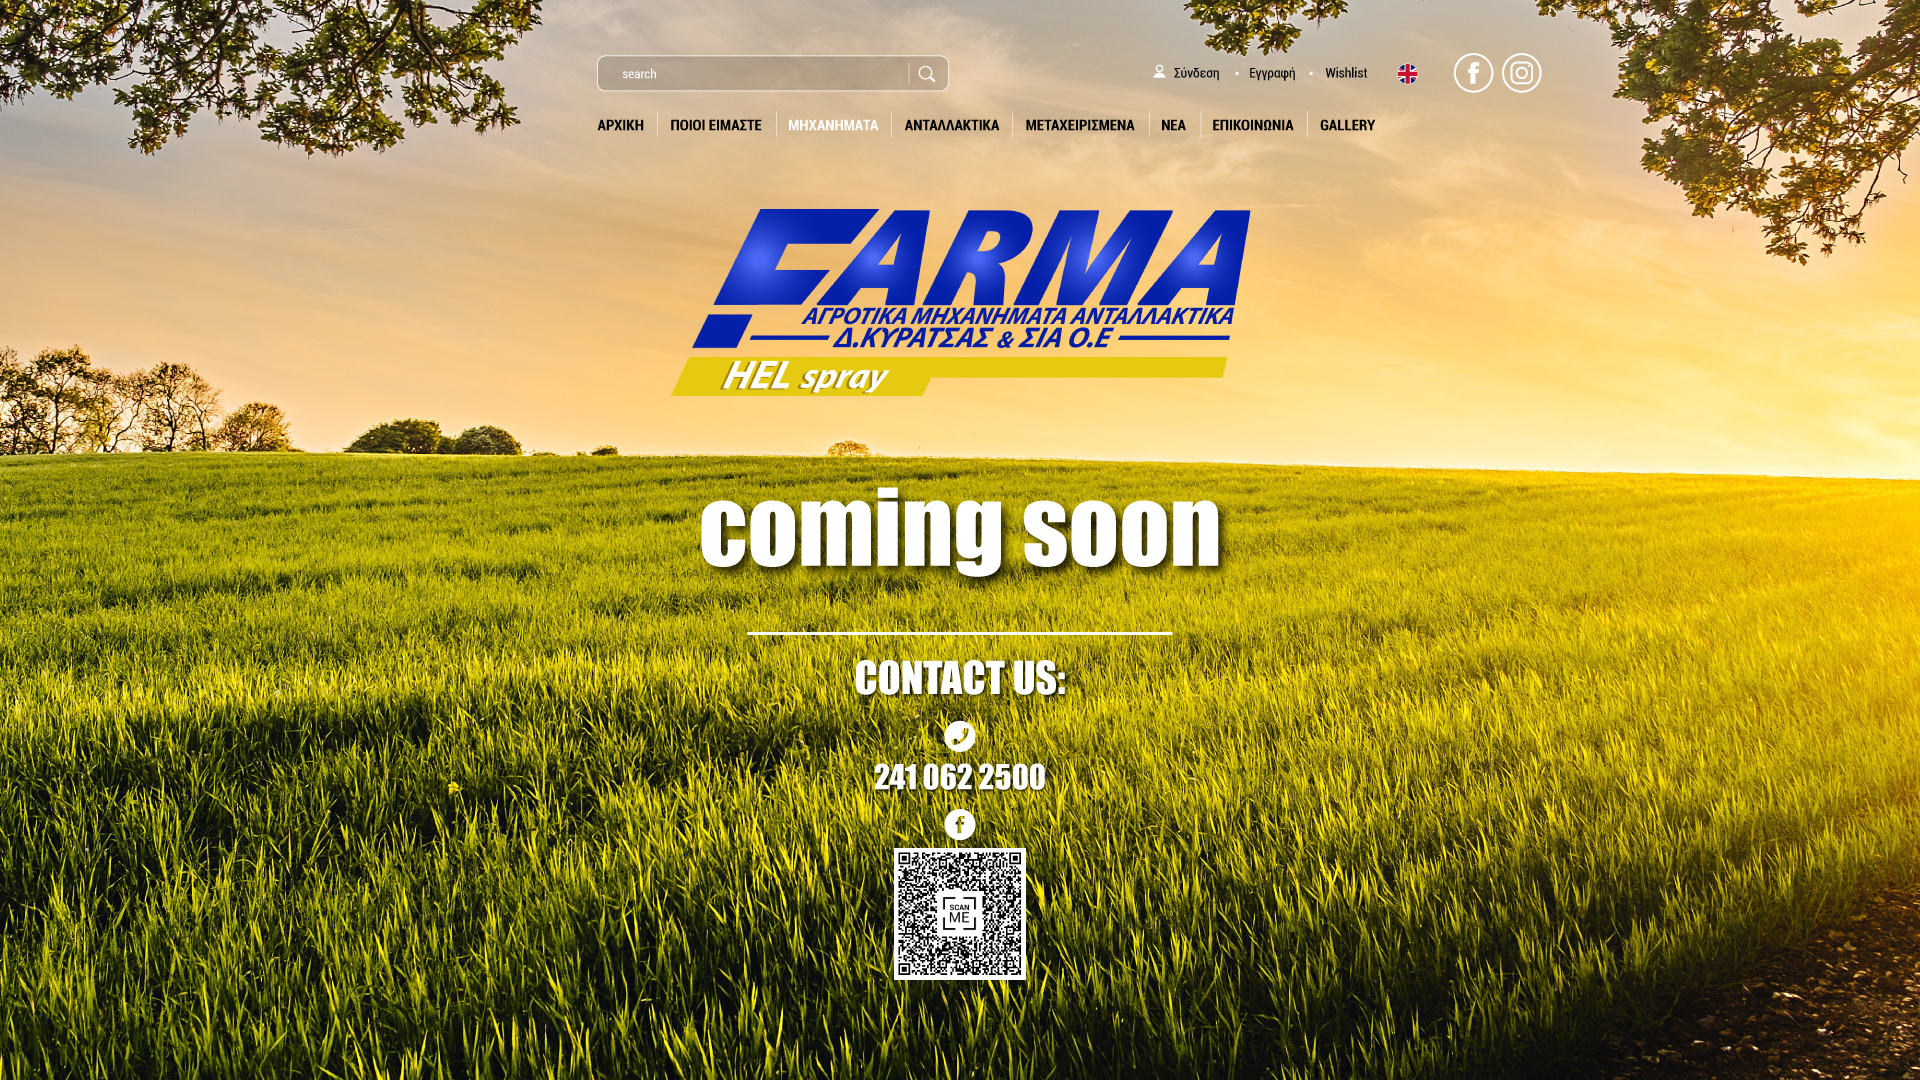 FARMA site under constraction. Contact us at info@farma.com.gr.